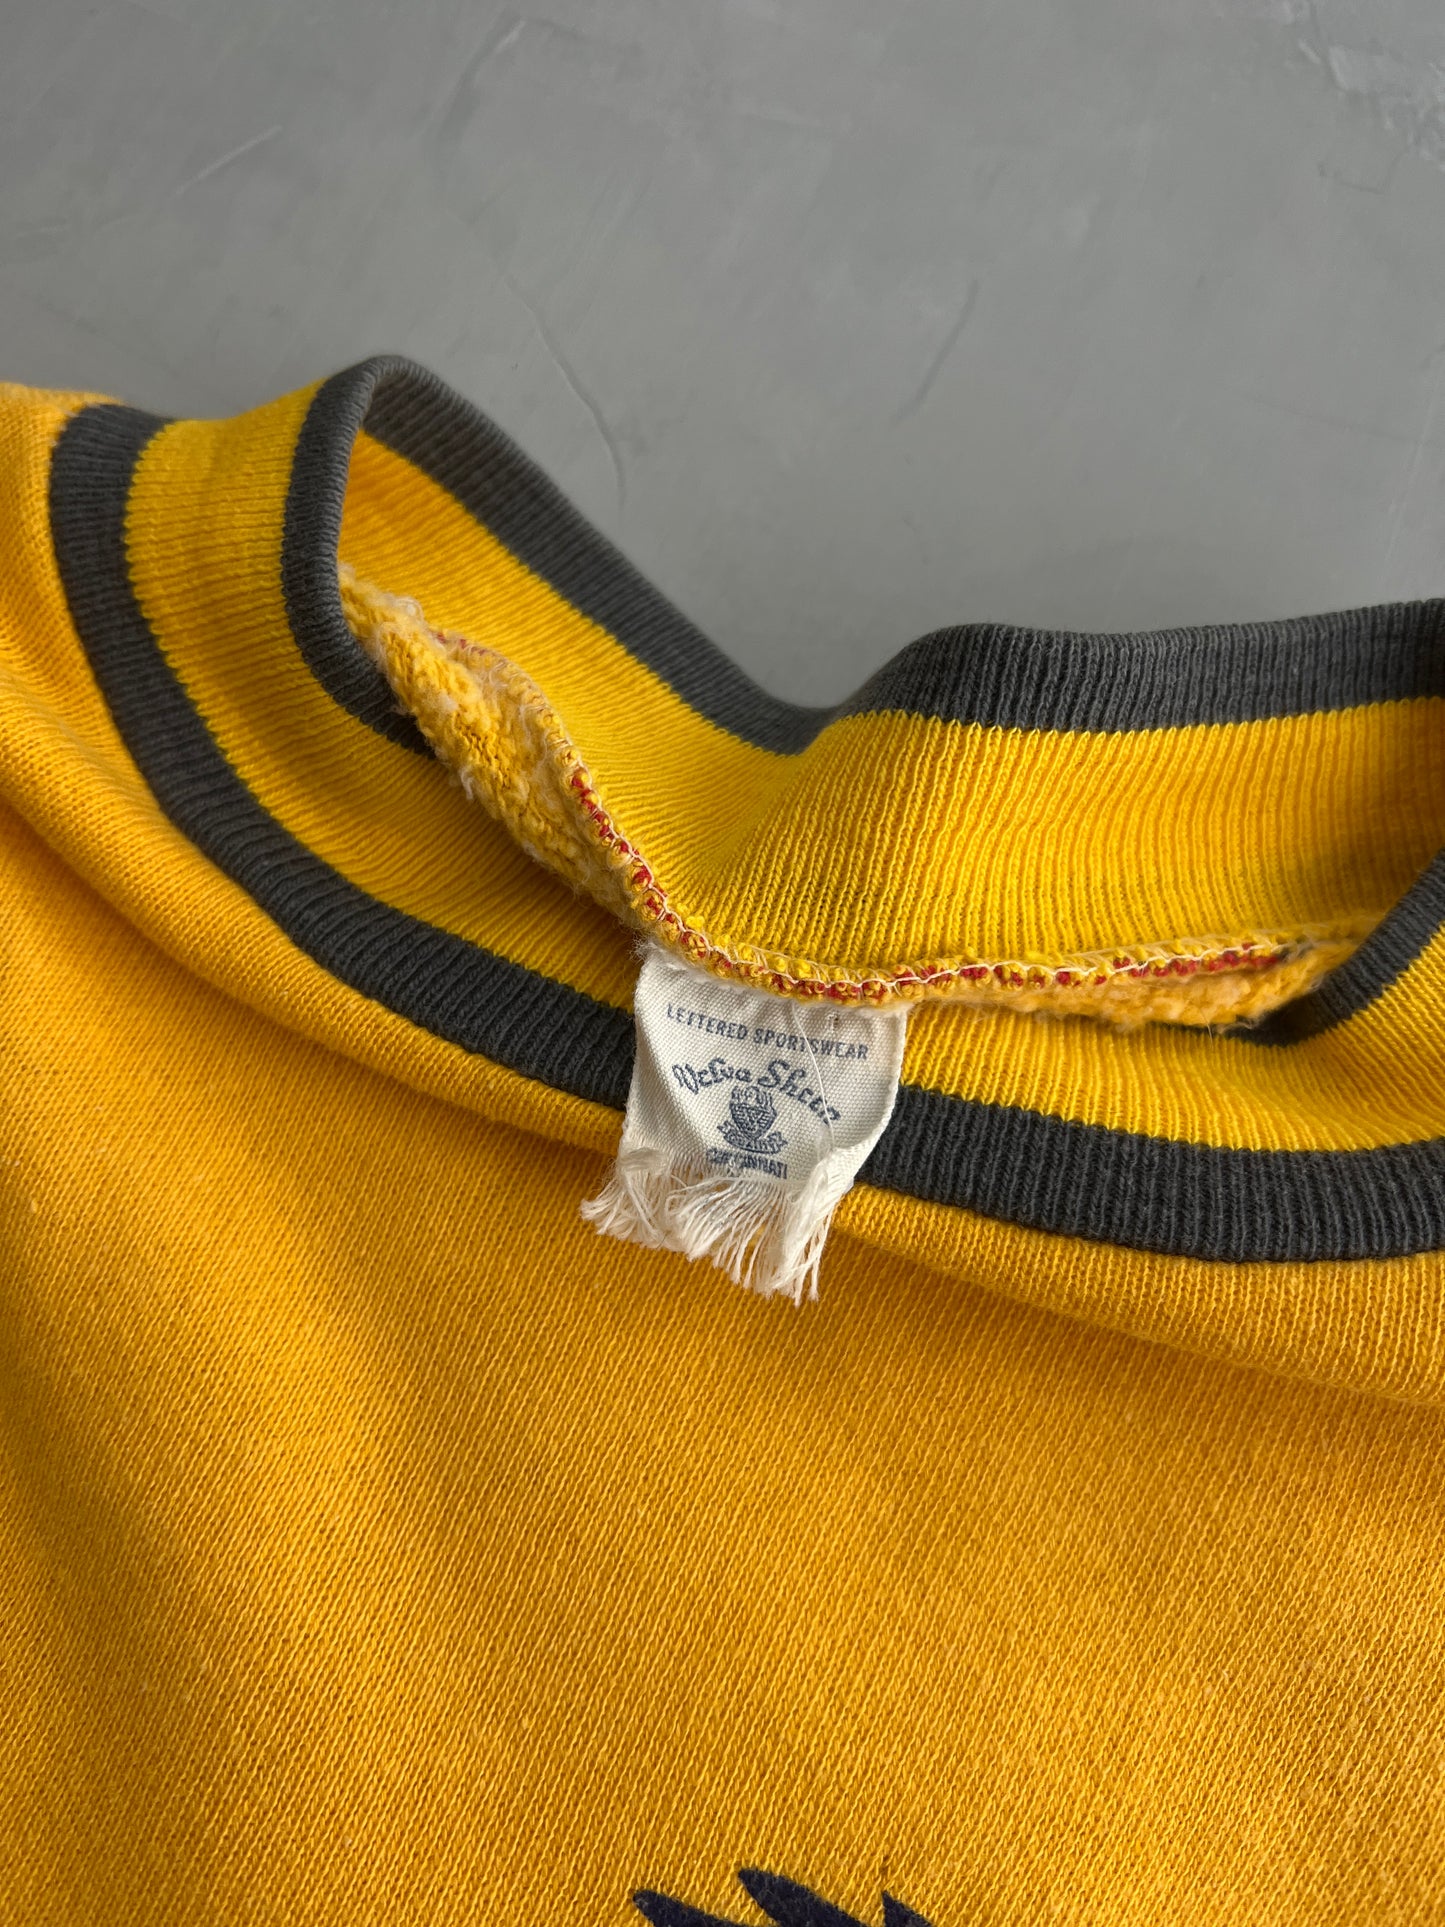 70's Short Sleeve Sweatshirt [S/M]